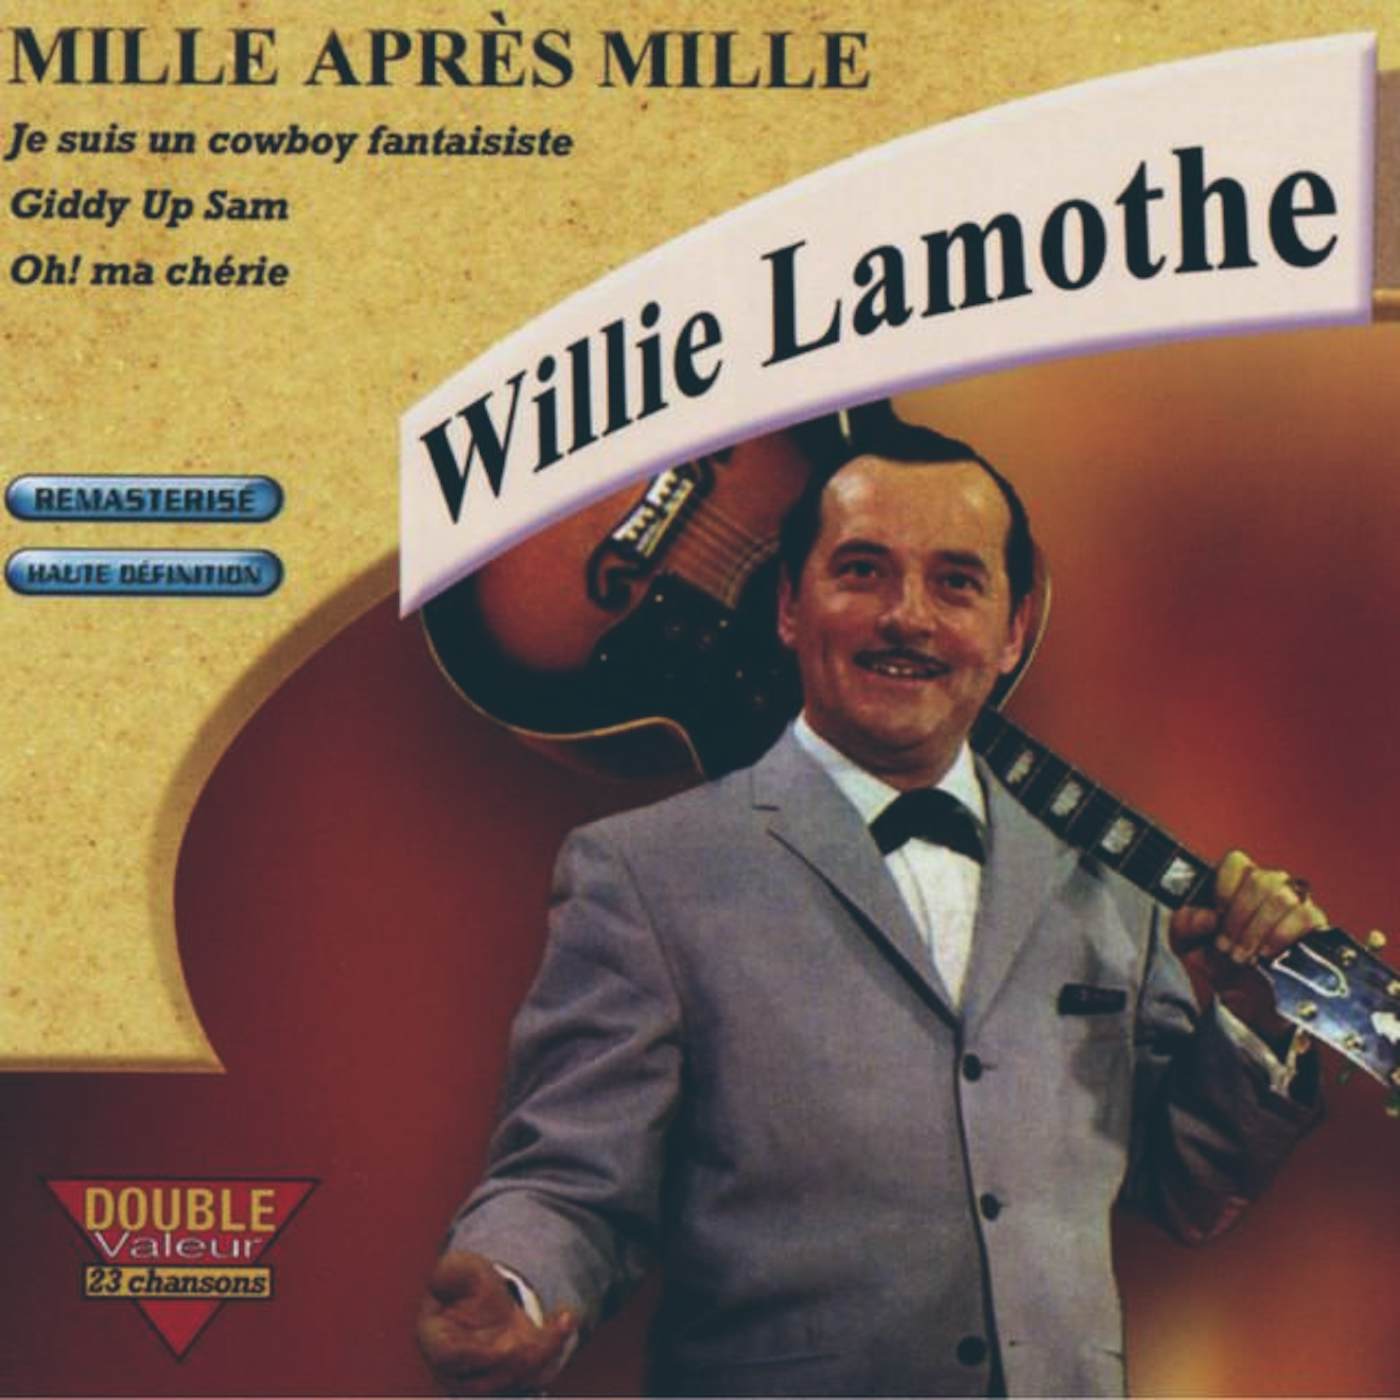 Willie Lamothe